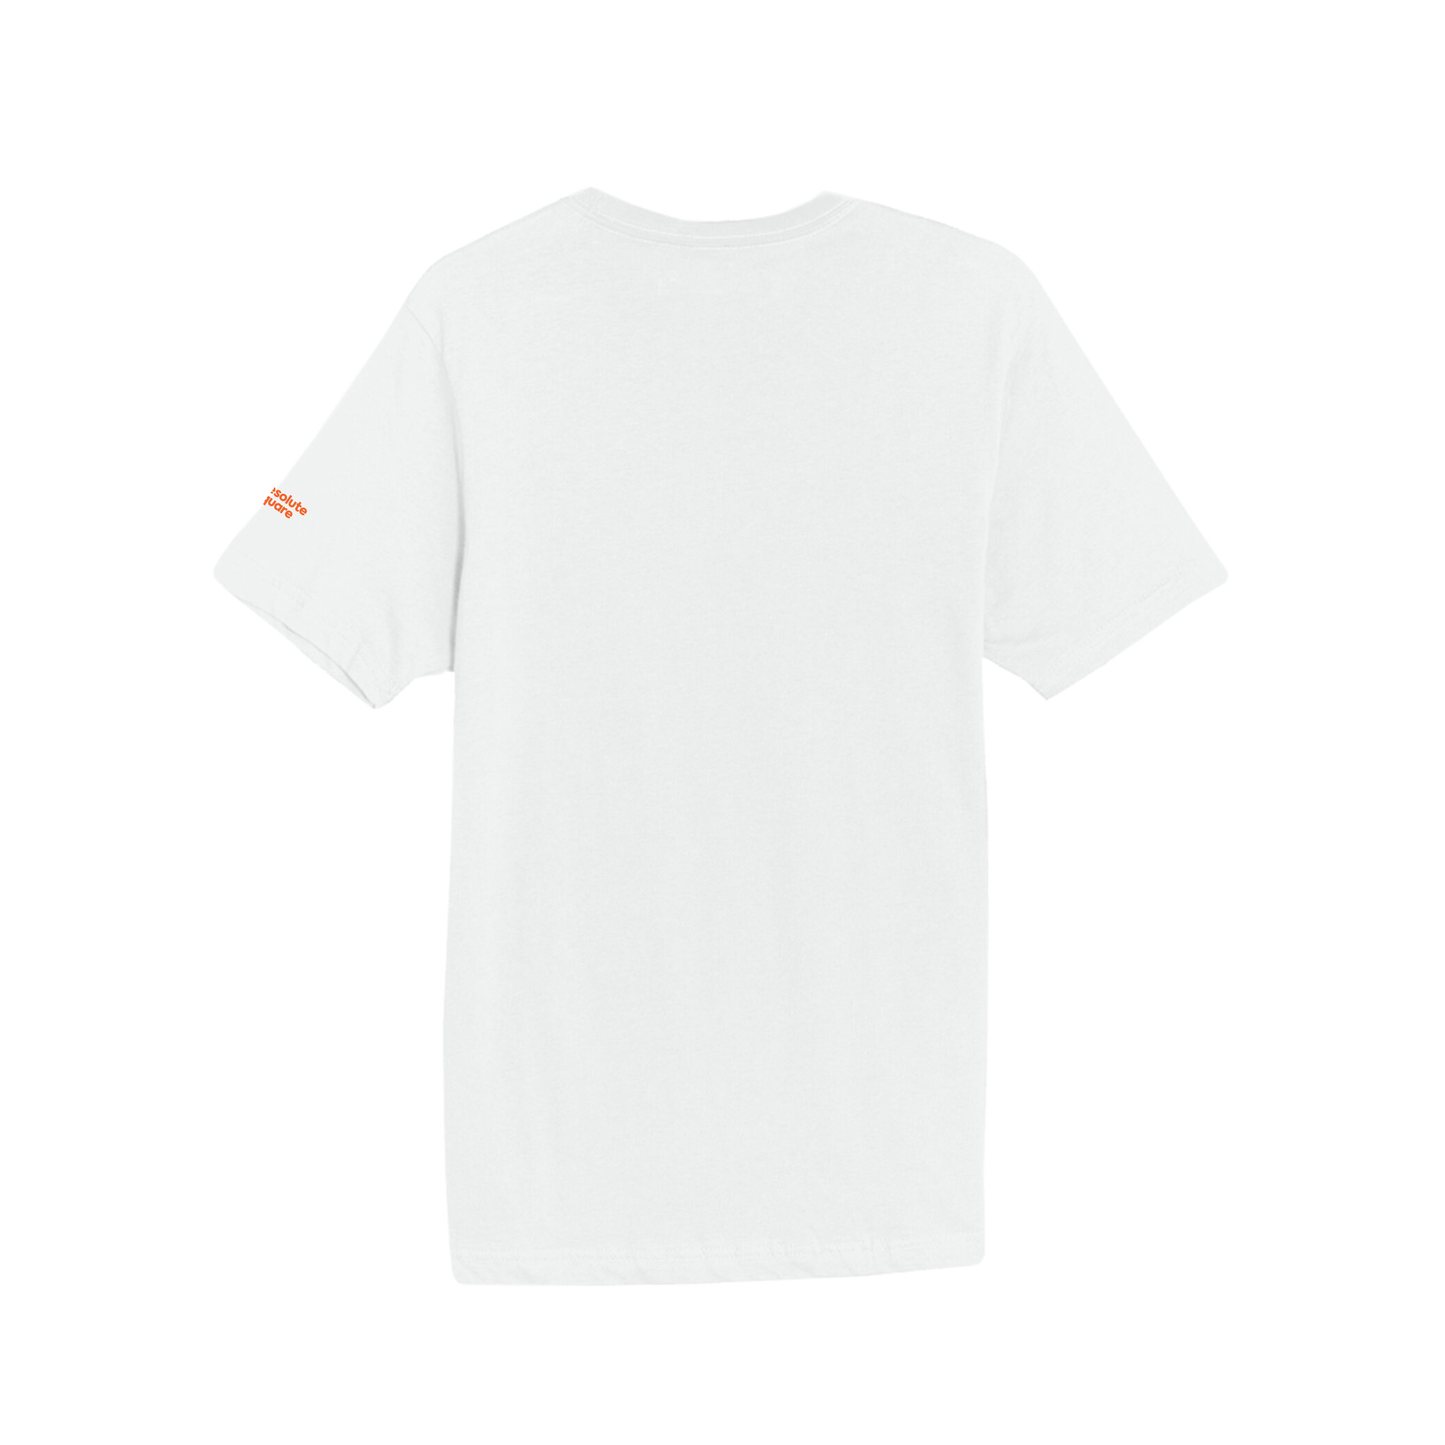 Roe Your Vote - Unisex Short Sleeve T-Shirt